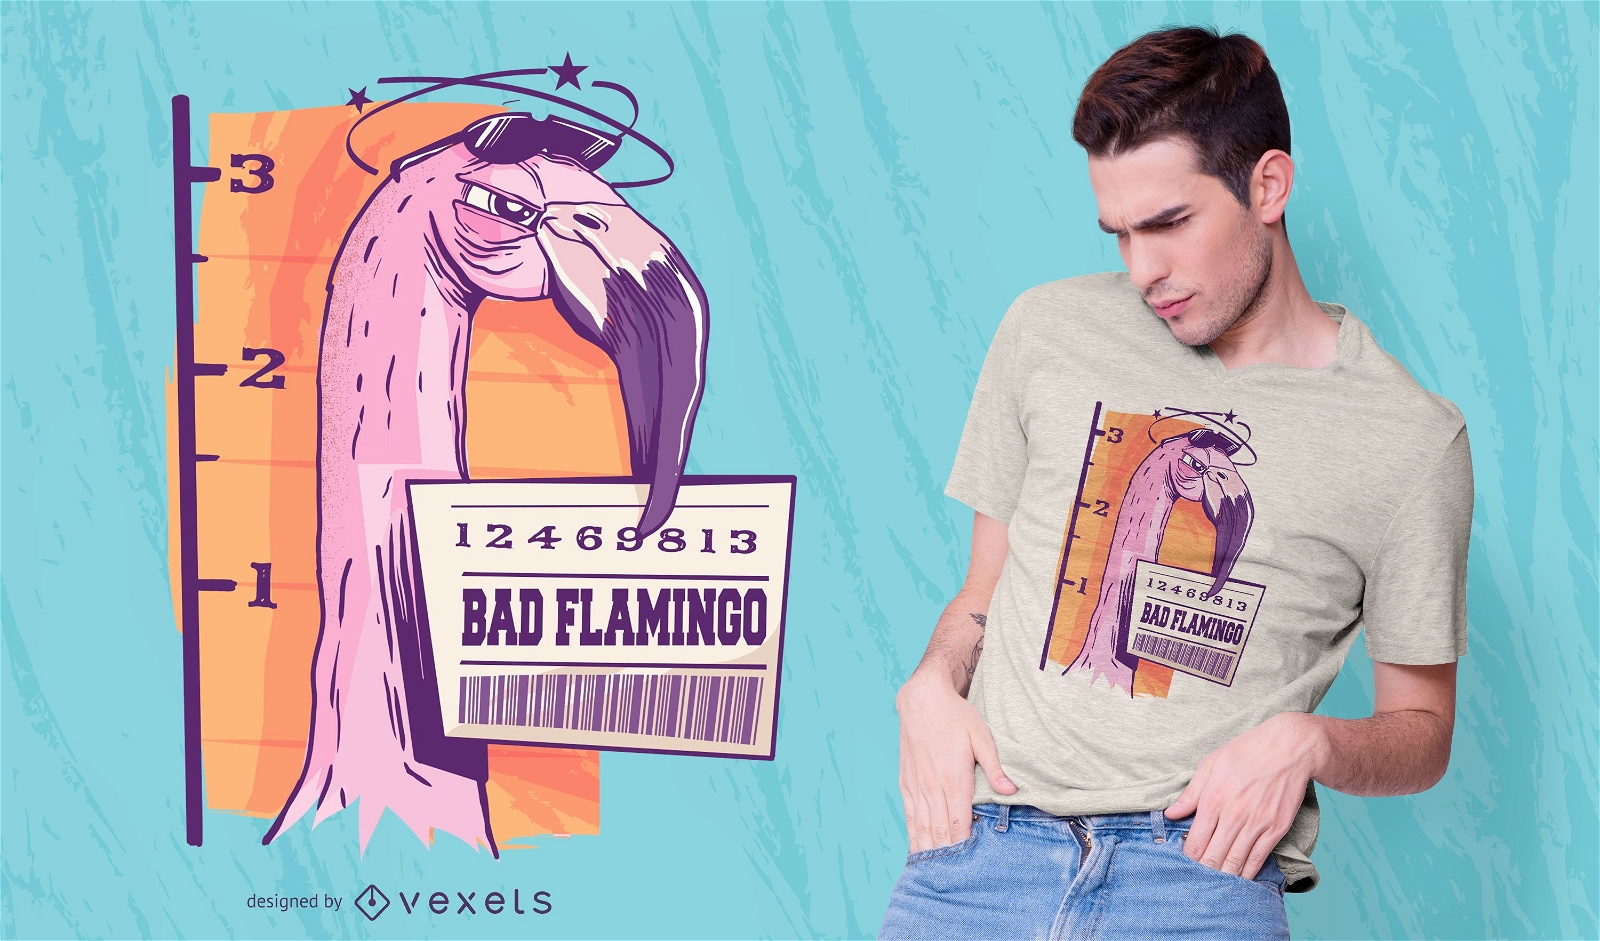 Bad flamingo t-shirt design